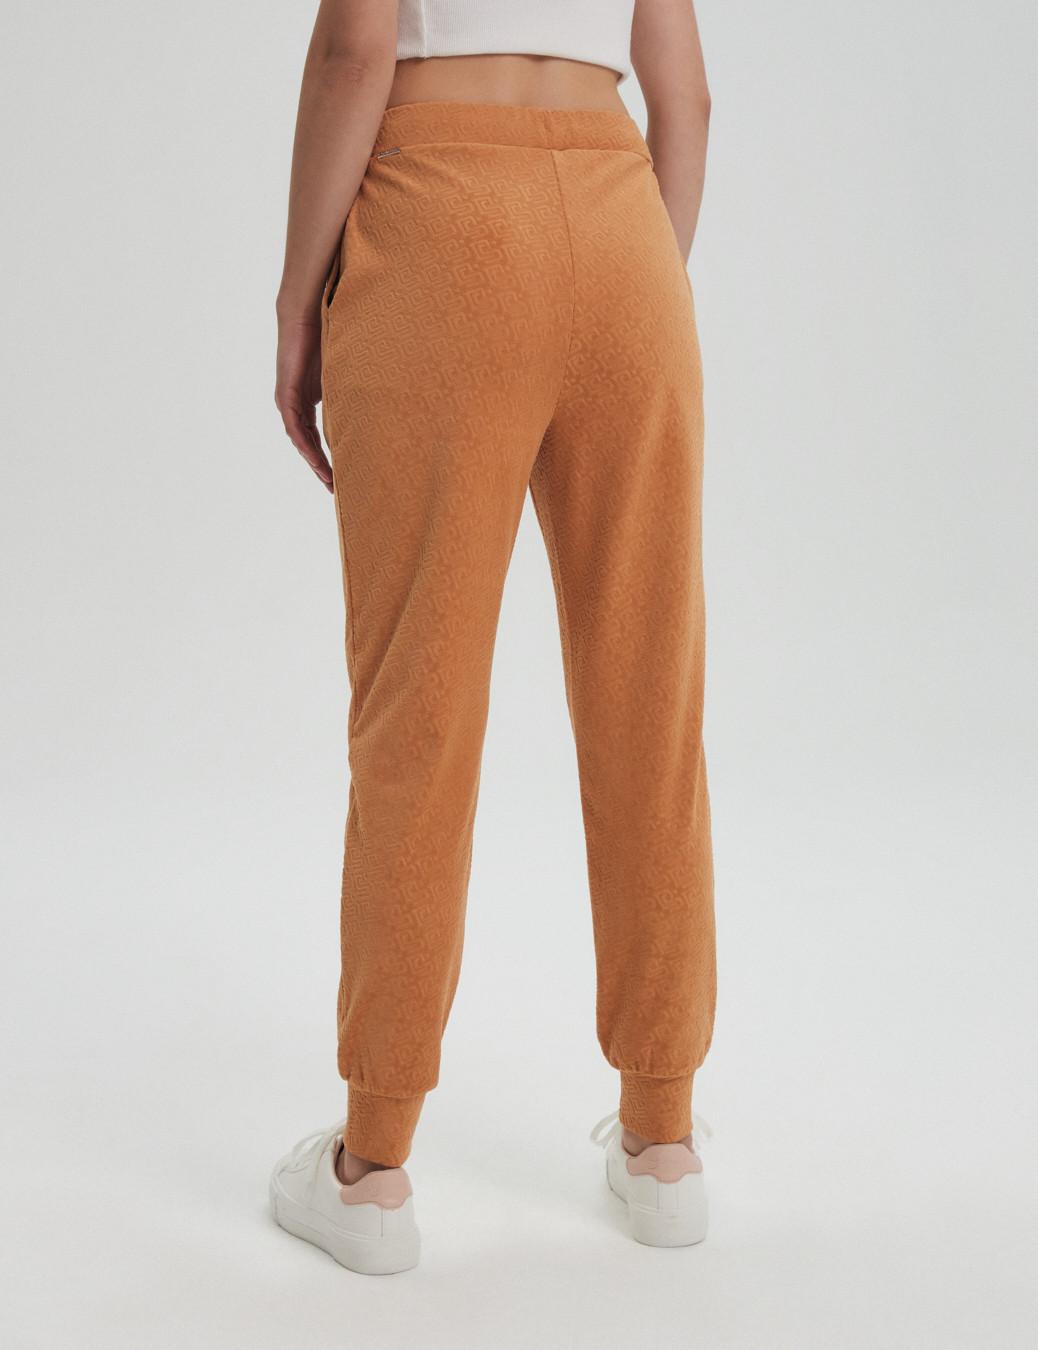 Spodnie dresowe damskie. Modne dresy i legginsy - sklep online Diverse